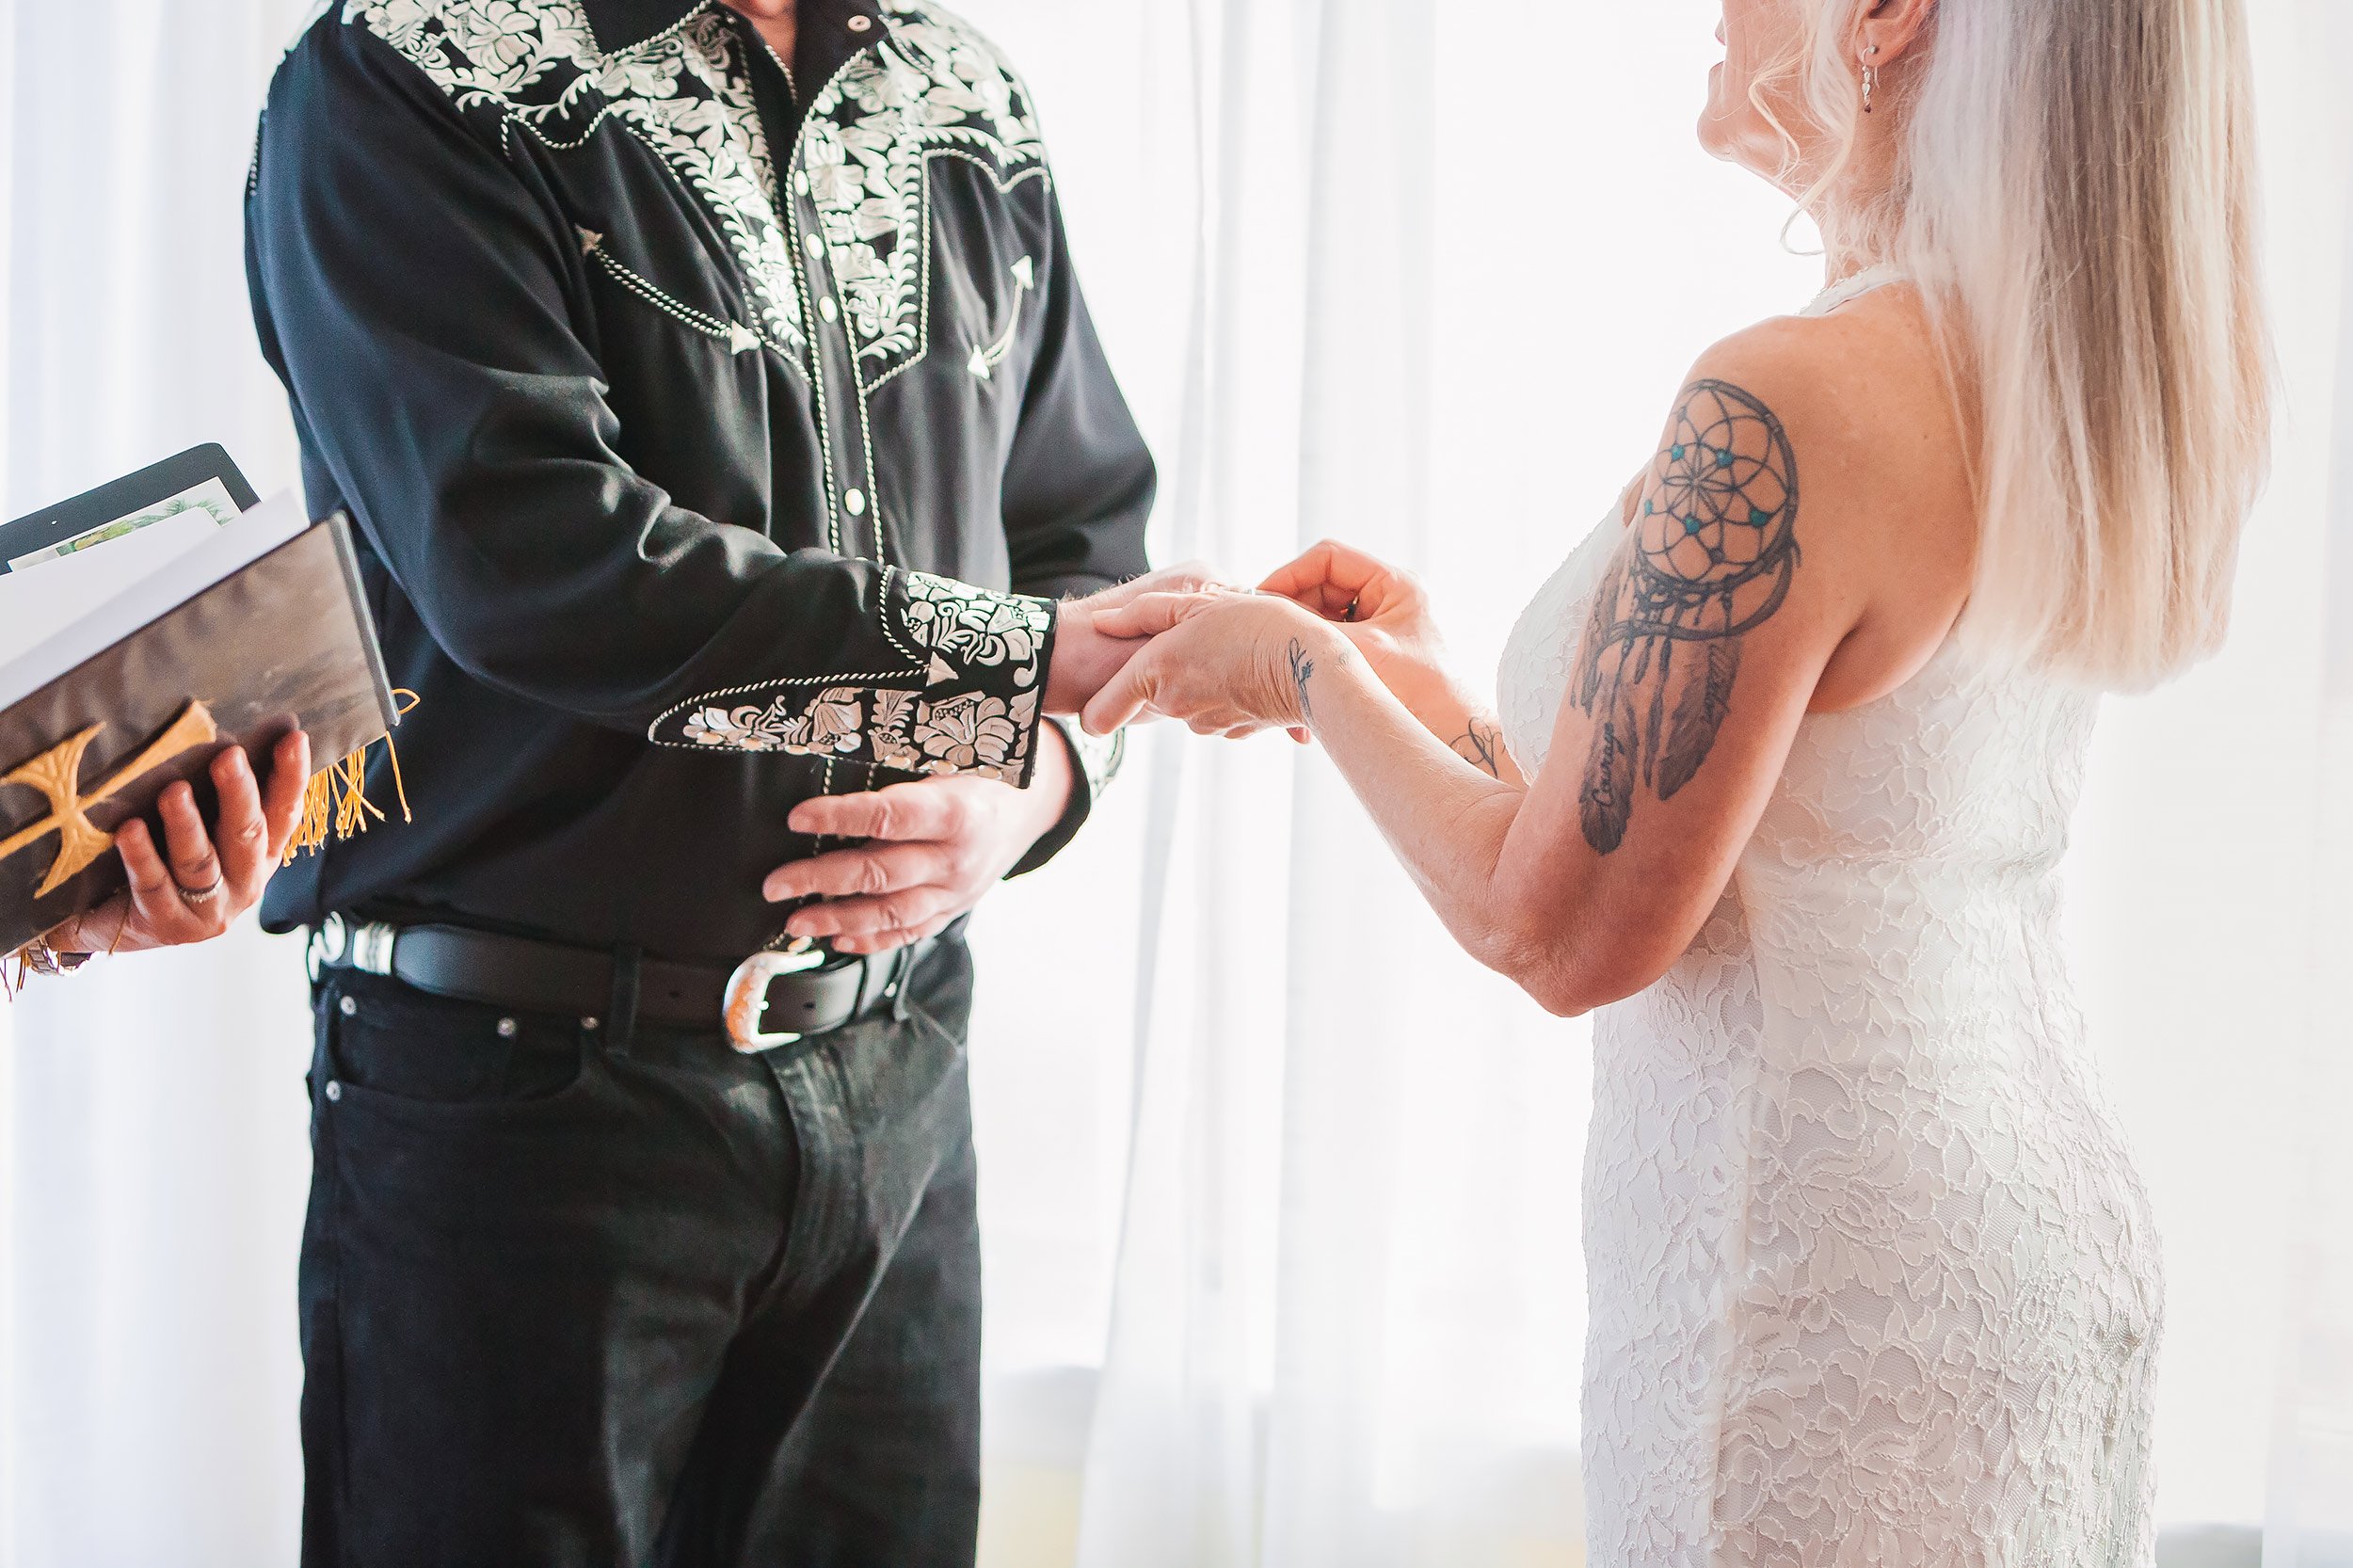 Newburyport Intimate Wedding Ceremony at home | Stephen Grant Photography